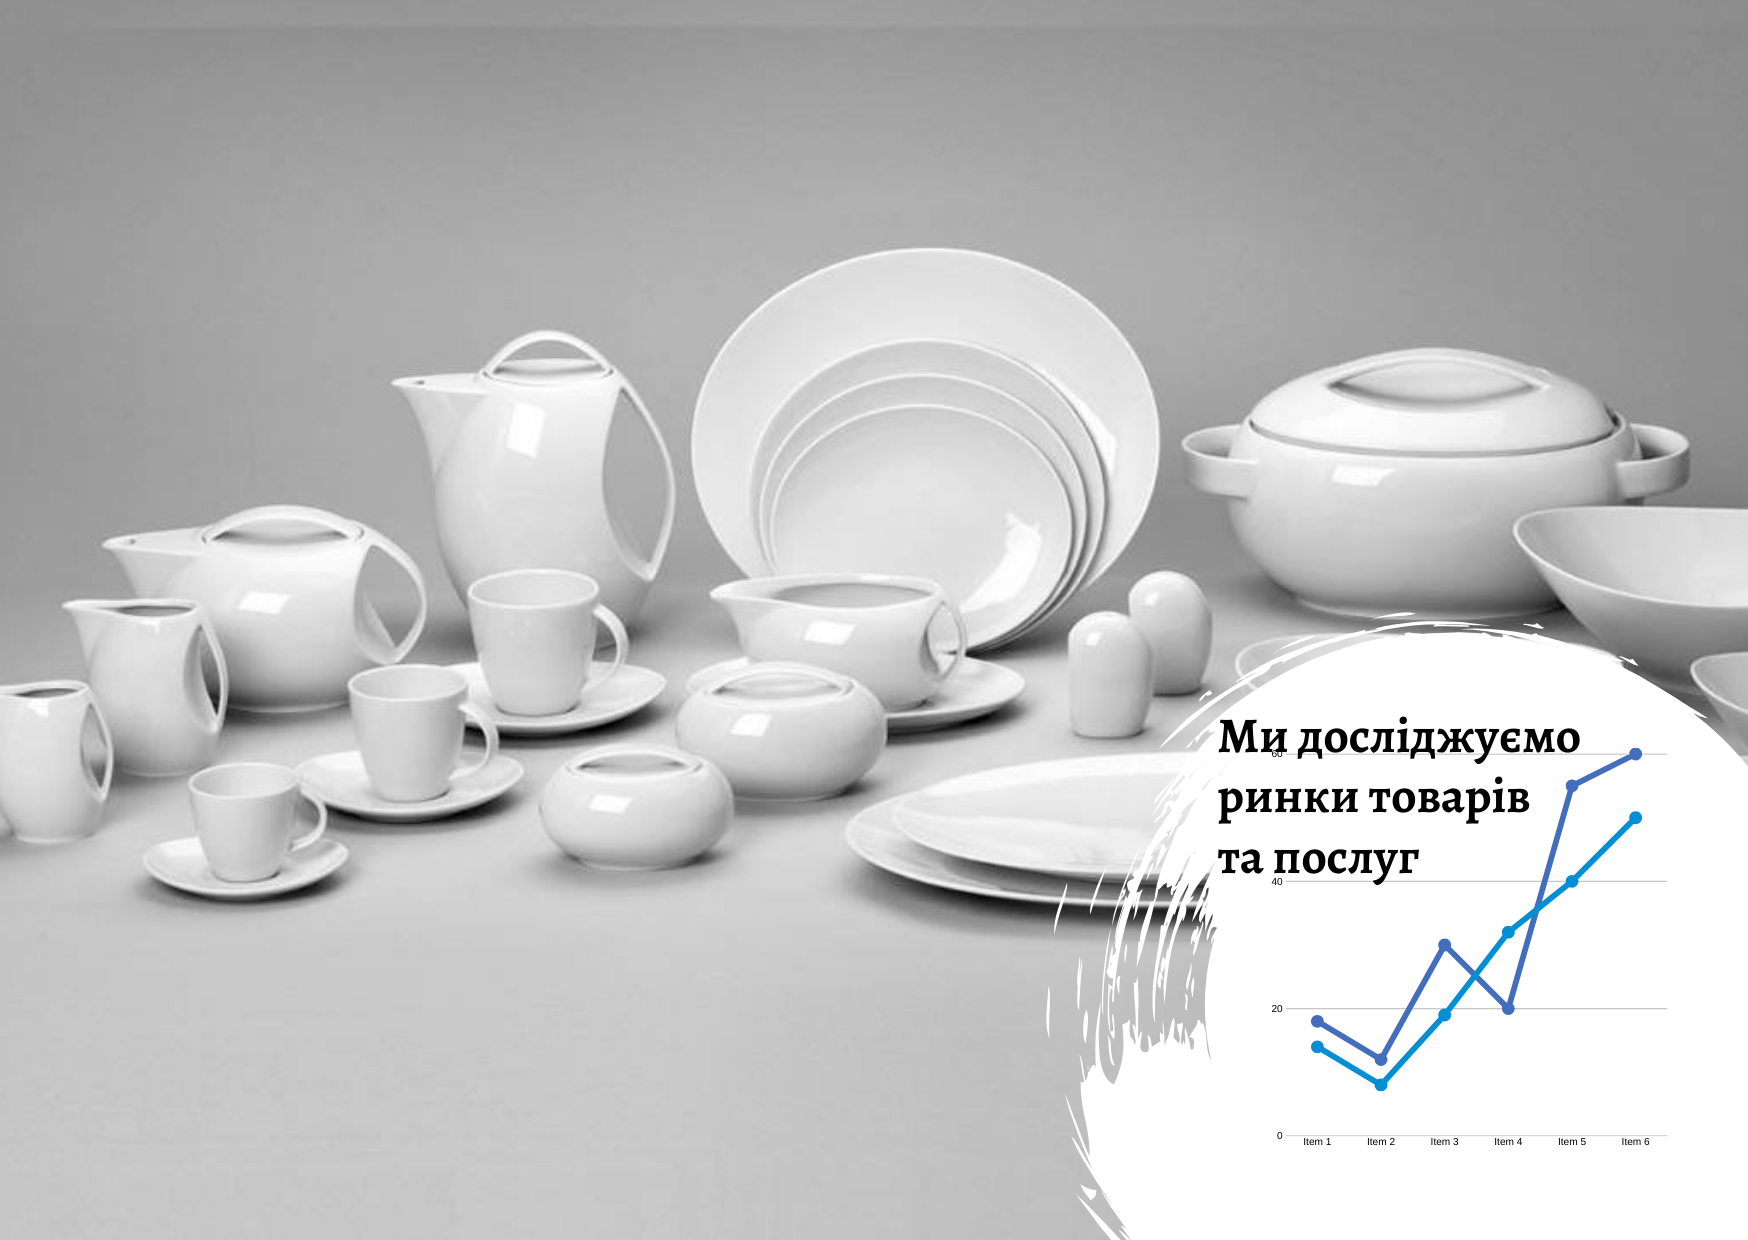 Ukrainian porcelain tableware market: trends